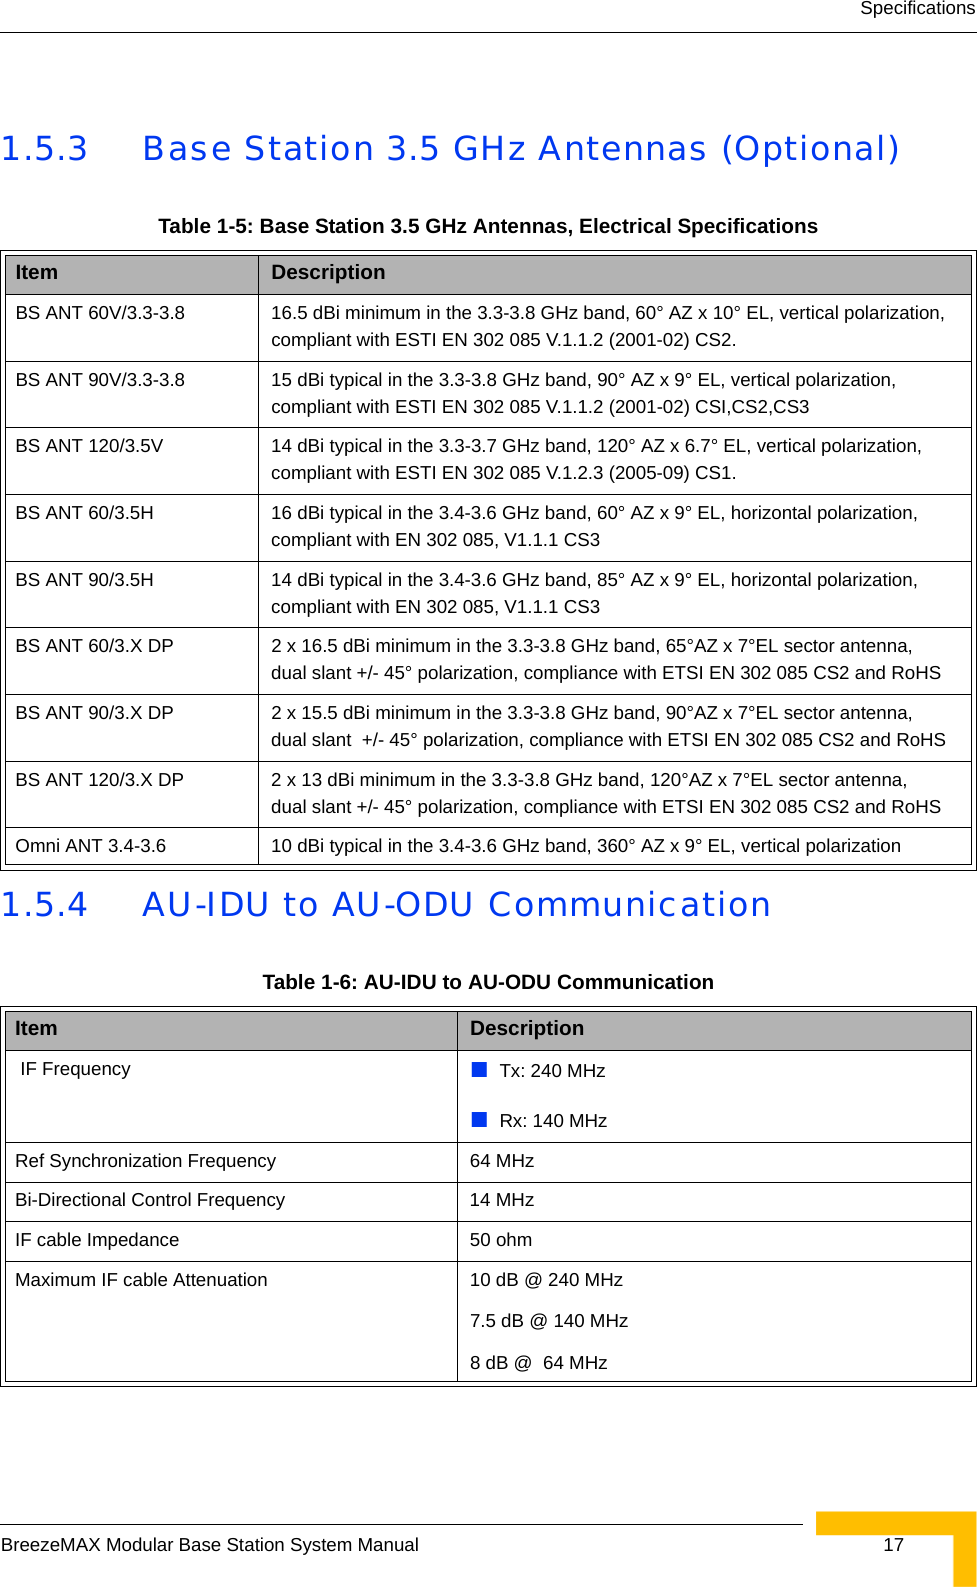 SpecificationsBreezeMAX Modular Base Station System Manual  171.5.3 Base Station 3.5 GHz Antennas (Optional)1.5.4 AU-IDU to AU-ODU CommunicationTable 1-5: Base Station 3.5 GHz Antennas, Electrical SpecificationsItem DescriptionBS ANT 60V/3.3-3.8 16.5 dBi minimum in the 3.3-3.8 GHz band, 60° AZ x 10° EL, vertical polarization, compliant with ESTI EN 302 085 V.1.1.2 (2001-02) CS2.BS ANT 90V/3.3-3.8 15 dBi typical in the 3.3-3.8 GHz band, 90° AZ x 9° EL, vertical polarization, compliant with ESTI EN 302 085 V.1.1.2 (2001-02) CSI,CS2,CS3BS ANT 120/3.5V 14 dBi typical in the 3.3-3.7 GHz band, 120° AZ x 6.7° EL, vertical polarization, compliant with ESTI EN 302 085 V.1.2.3 (2005-09) CS1.BS ANT 60/3.5H 16 dBi typical in the 3.4-3.6 GHz band, 60° AZ x 9° EL, horizontal polarization, compliant with EN 302 085, V1.1.1 CS3BS ANT 90/3.5H 14 dBi typical in the 3.4-3.6 GHz band, 85° AZ x 9° EL, horizontal polarization, compliant with EN 302 085, V1.1.1 CS3BS ANT 60/3.X DP 2 x 16.5 dBi minimum in the 3.3-3.8 GHz band, 65°AZ x 7°EL sector antenna, dual slant +/- 45° polarization, compliance with ETSI EN 302 085 CS2 and RoHSBS ANT 90/3.X DP 2 x 15.5 dBi minimum in the 3.3-3.8 GHz band, 90°AZ x 7°EL sector antenna, dual slant  +/- 45° polarization, compliance with ETSI EN 302 085 CS2 and RoHSBS ANT 120/3.X DP 2 x 13 dBi minimum in the 3.3-3.8 GHz band, 120°AZ x 7°EL sector antenna, dual slant +/- 45° polarization, compliance with ETSI EN 302 085 CS2 and RoHSOmni ANT 3.4-3.6 10 dBi typical in the 3.4-3.6 GHz band, 360° AZ x 9° EL, vertical polarizationTable 1-6: AU-IDU to AU-ODU CommunicationItem Description IF Frequency Tx: 240 MHzRx: 140 MHzRef Synchronization Frequency 64 MHzBi-Directional Control Frequency 14 MHzIF cable Impedance 50 ohmMaximum IF cable Attenuation   10 dB @ 240 MHz7.5 dB @ 140 MHz8 dB @  64 MHz